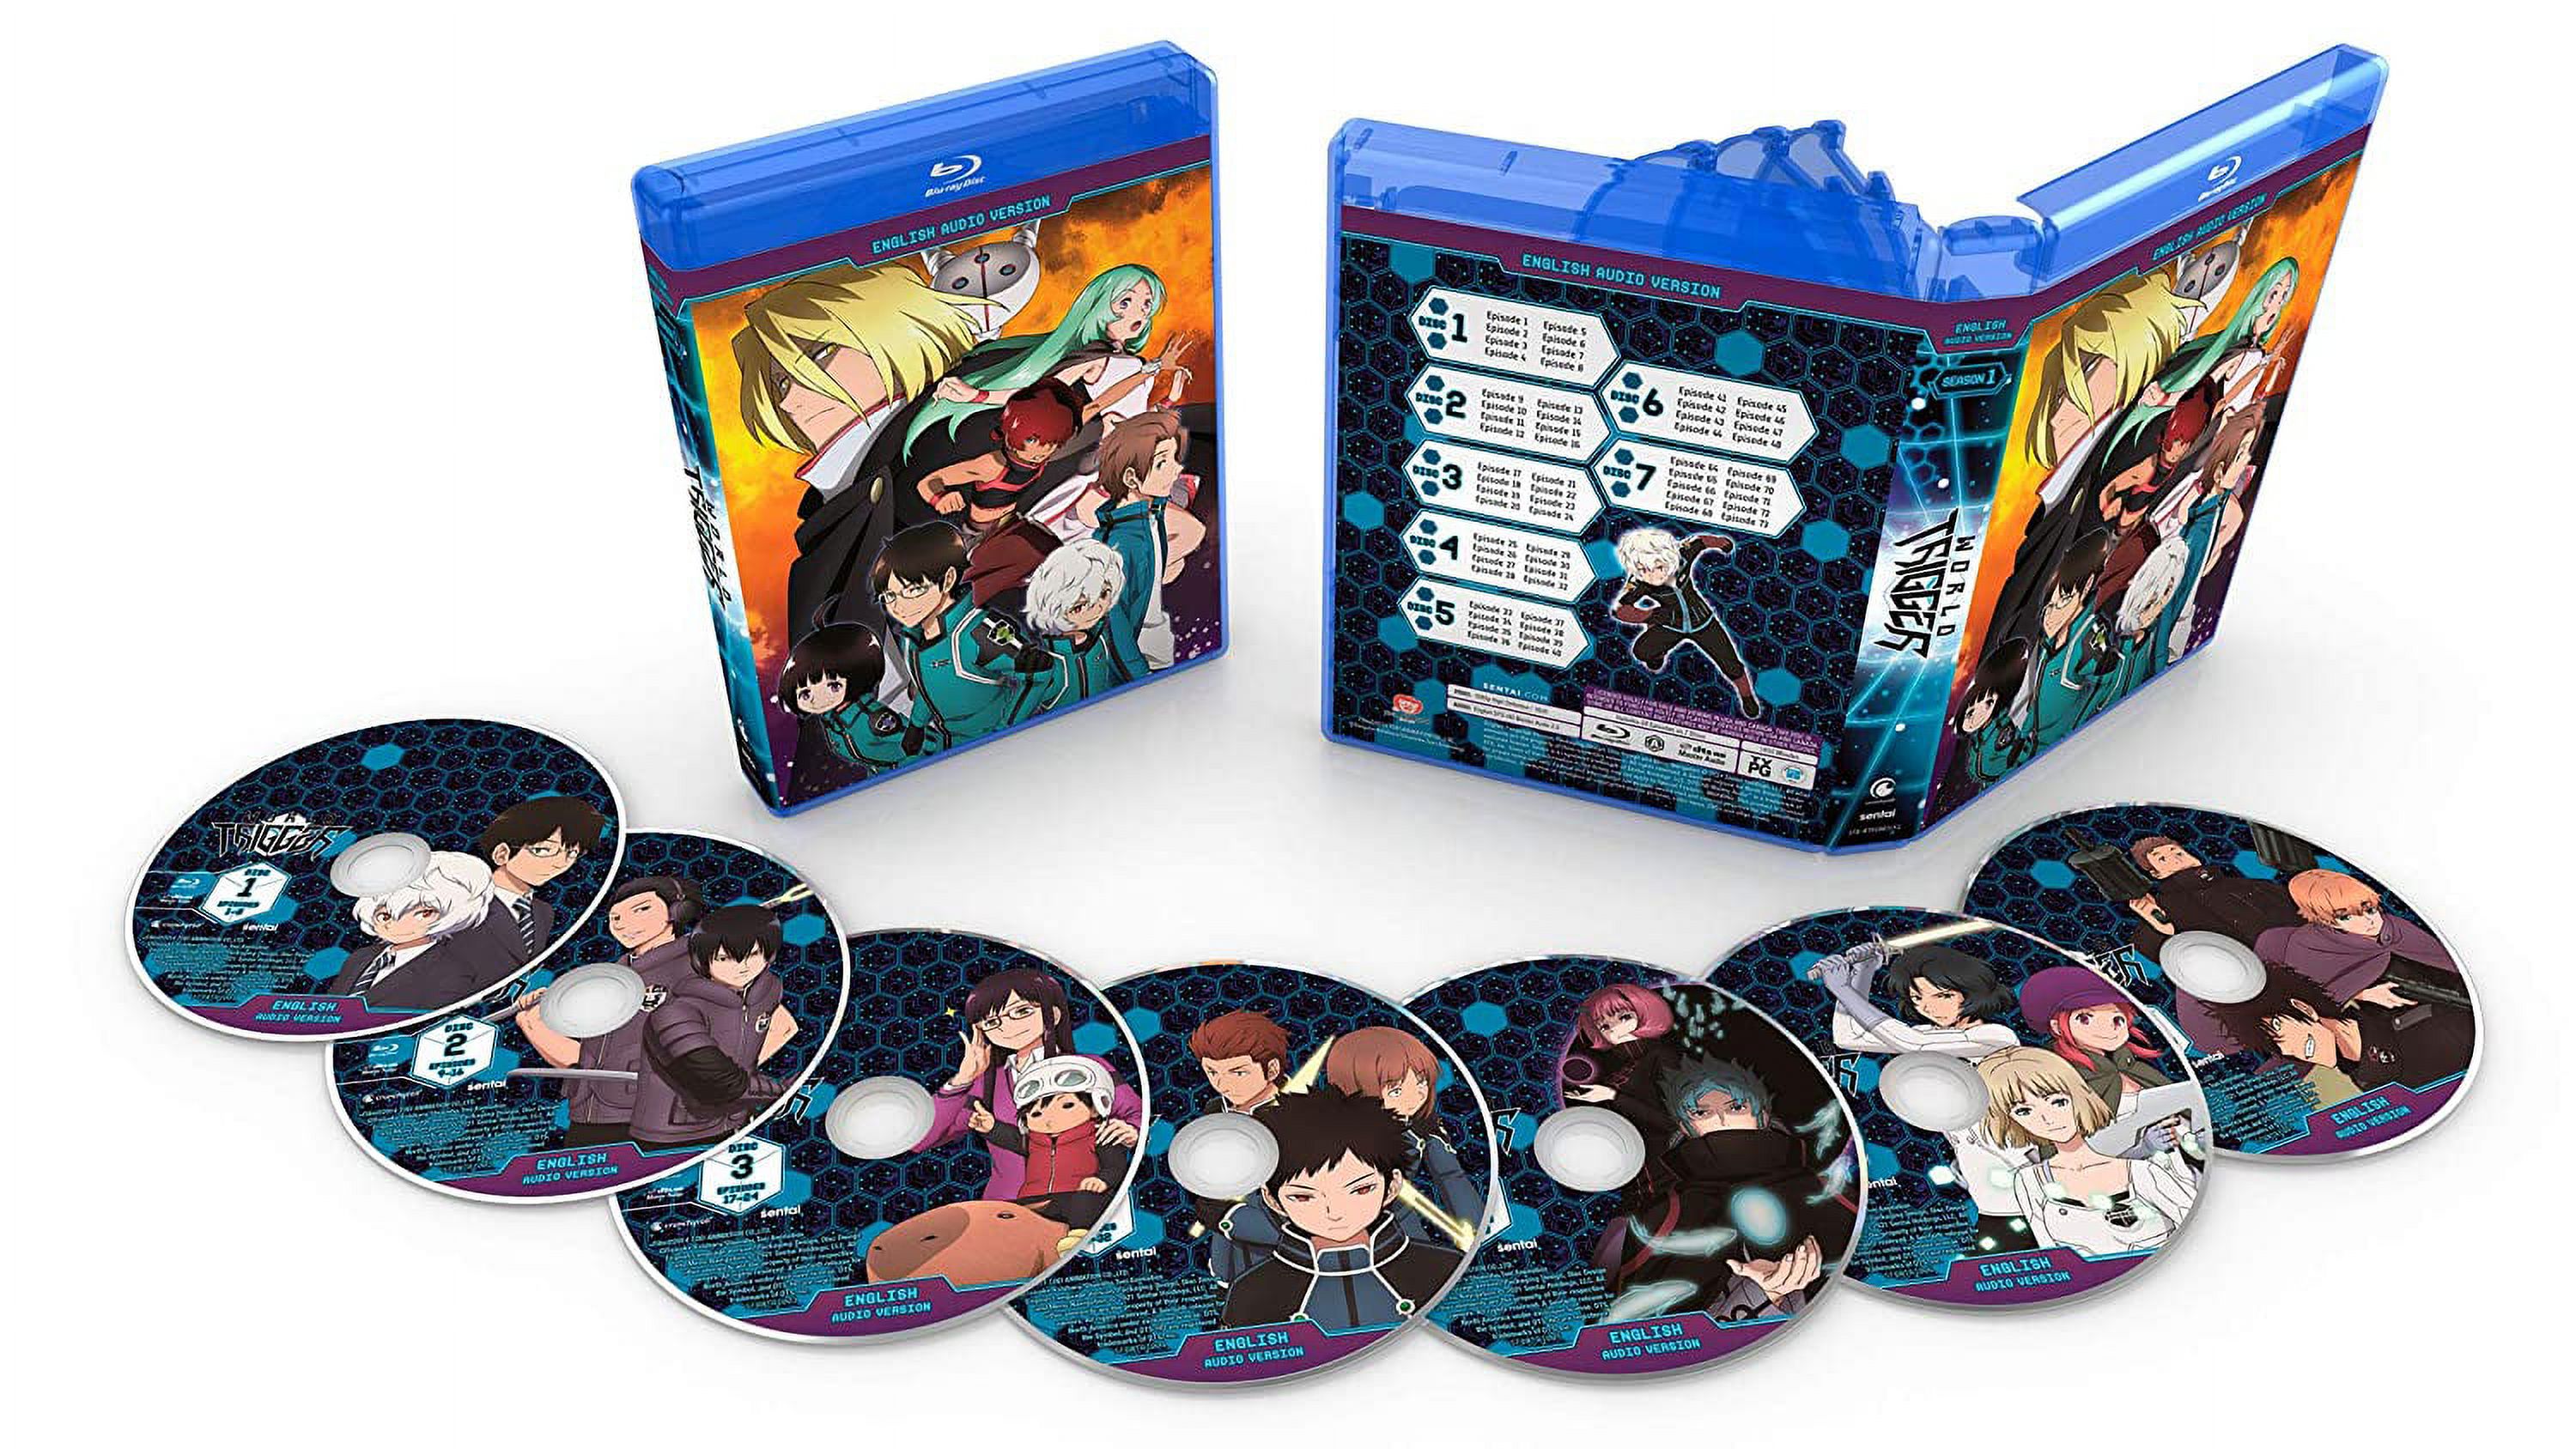 World Trigger (Blu-ray), Sentai, Anime & Animation 